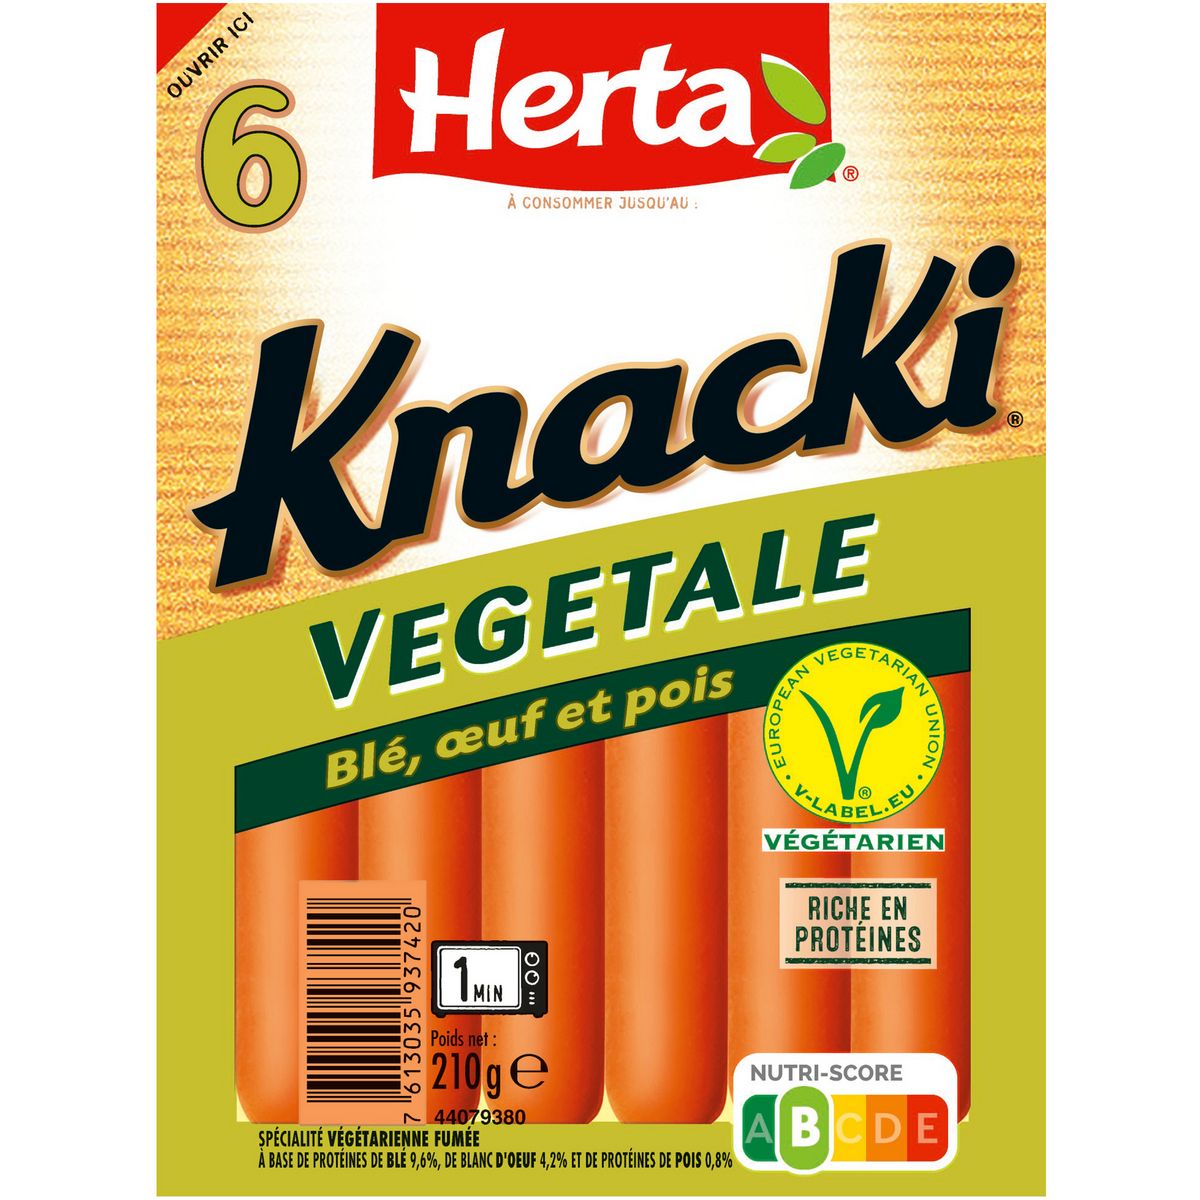 Herta Knacki Vegetal (Wheat, eggs & Peas) x6 210g